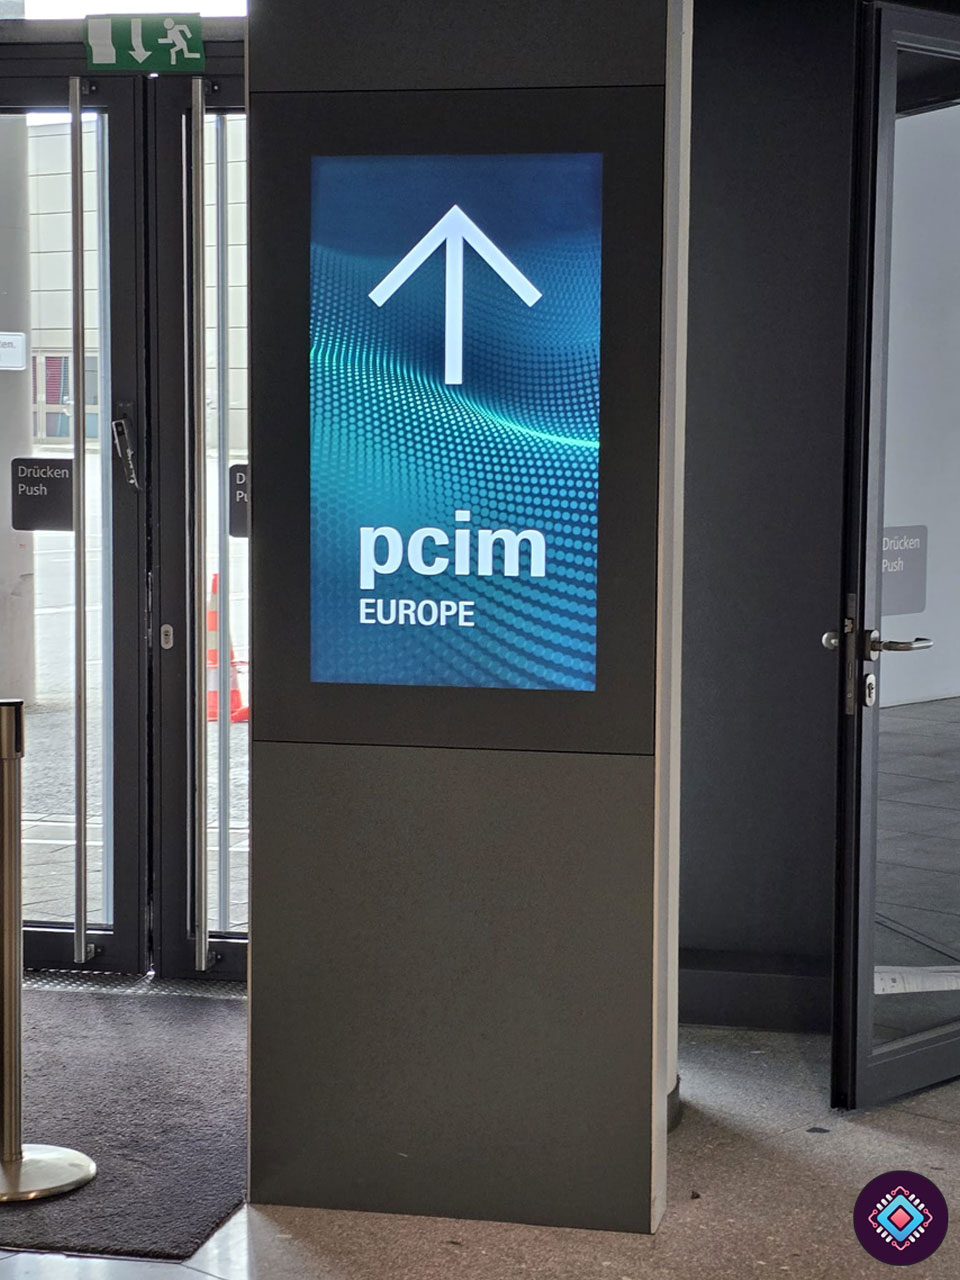 DM Tech Sales at PCIM Show Germany 2024